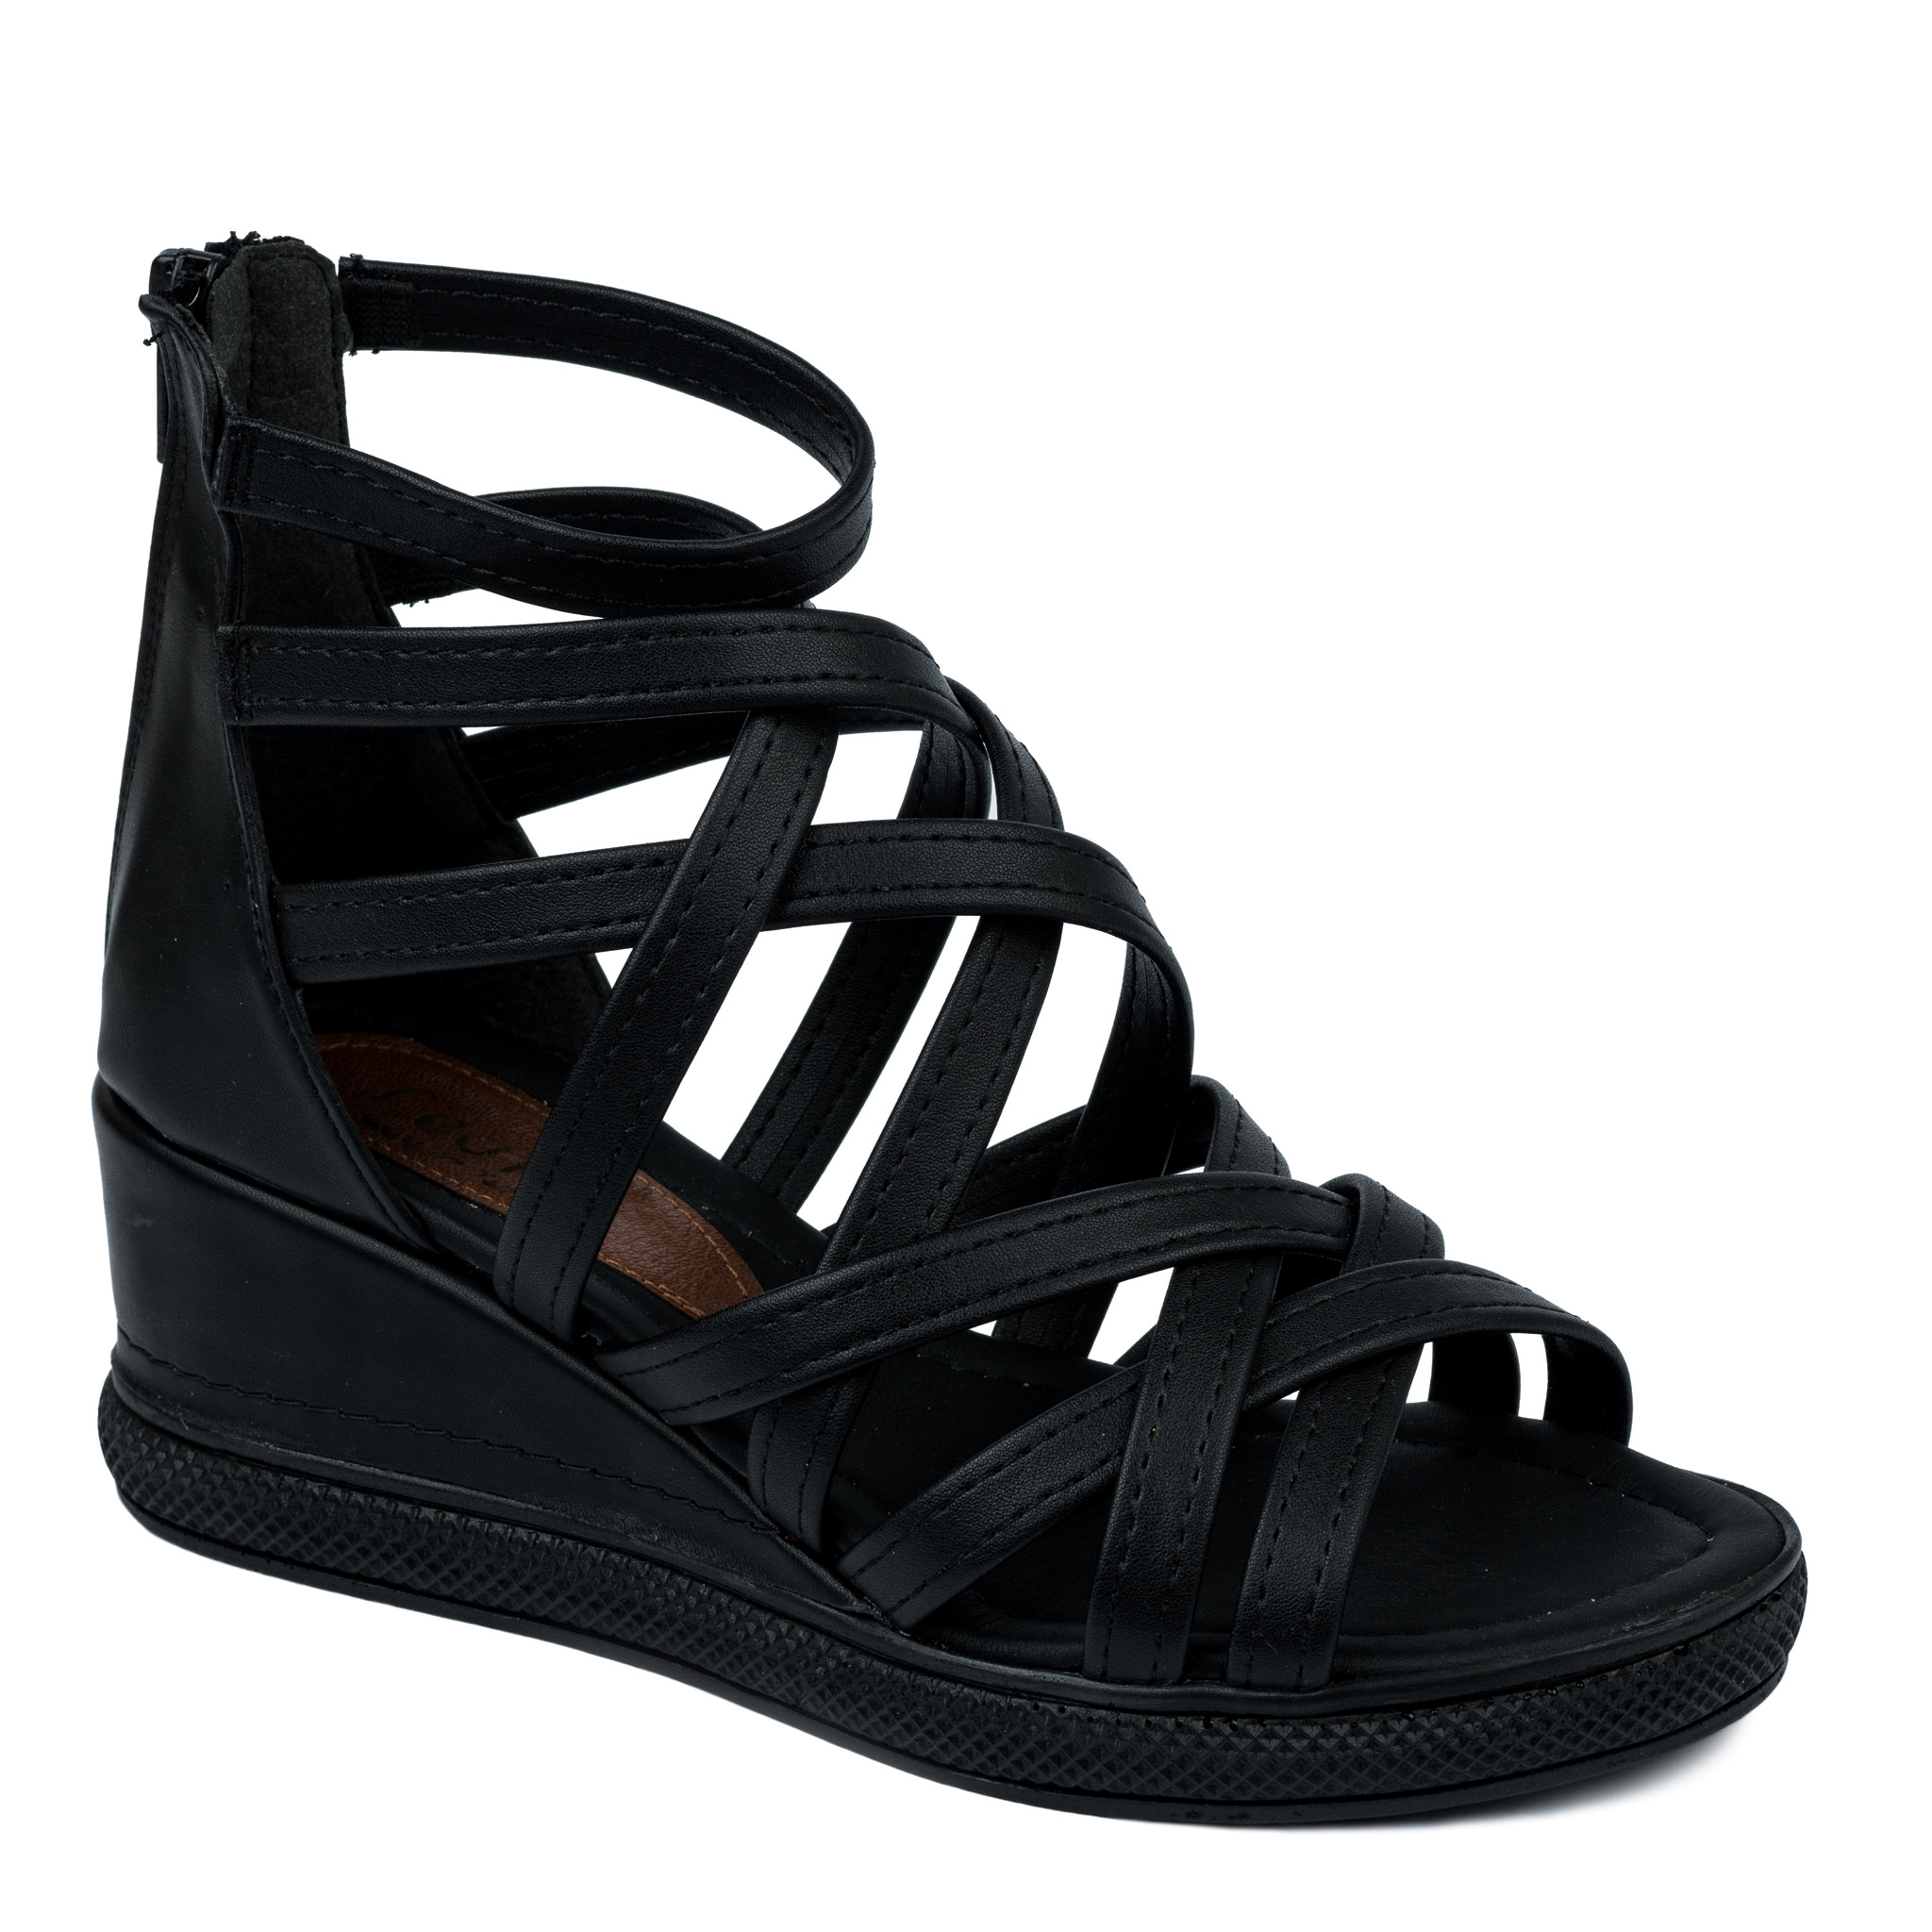 Women sandals A600 - BLACK